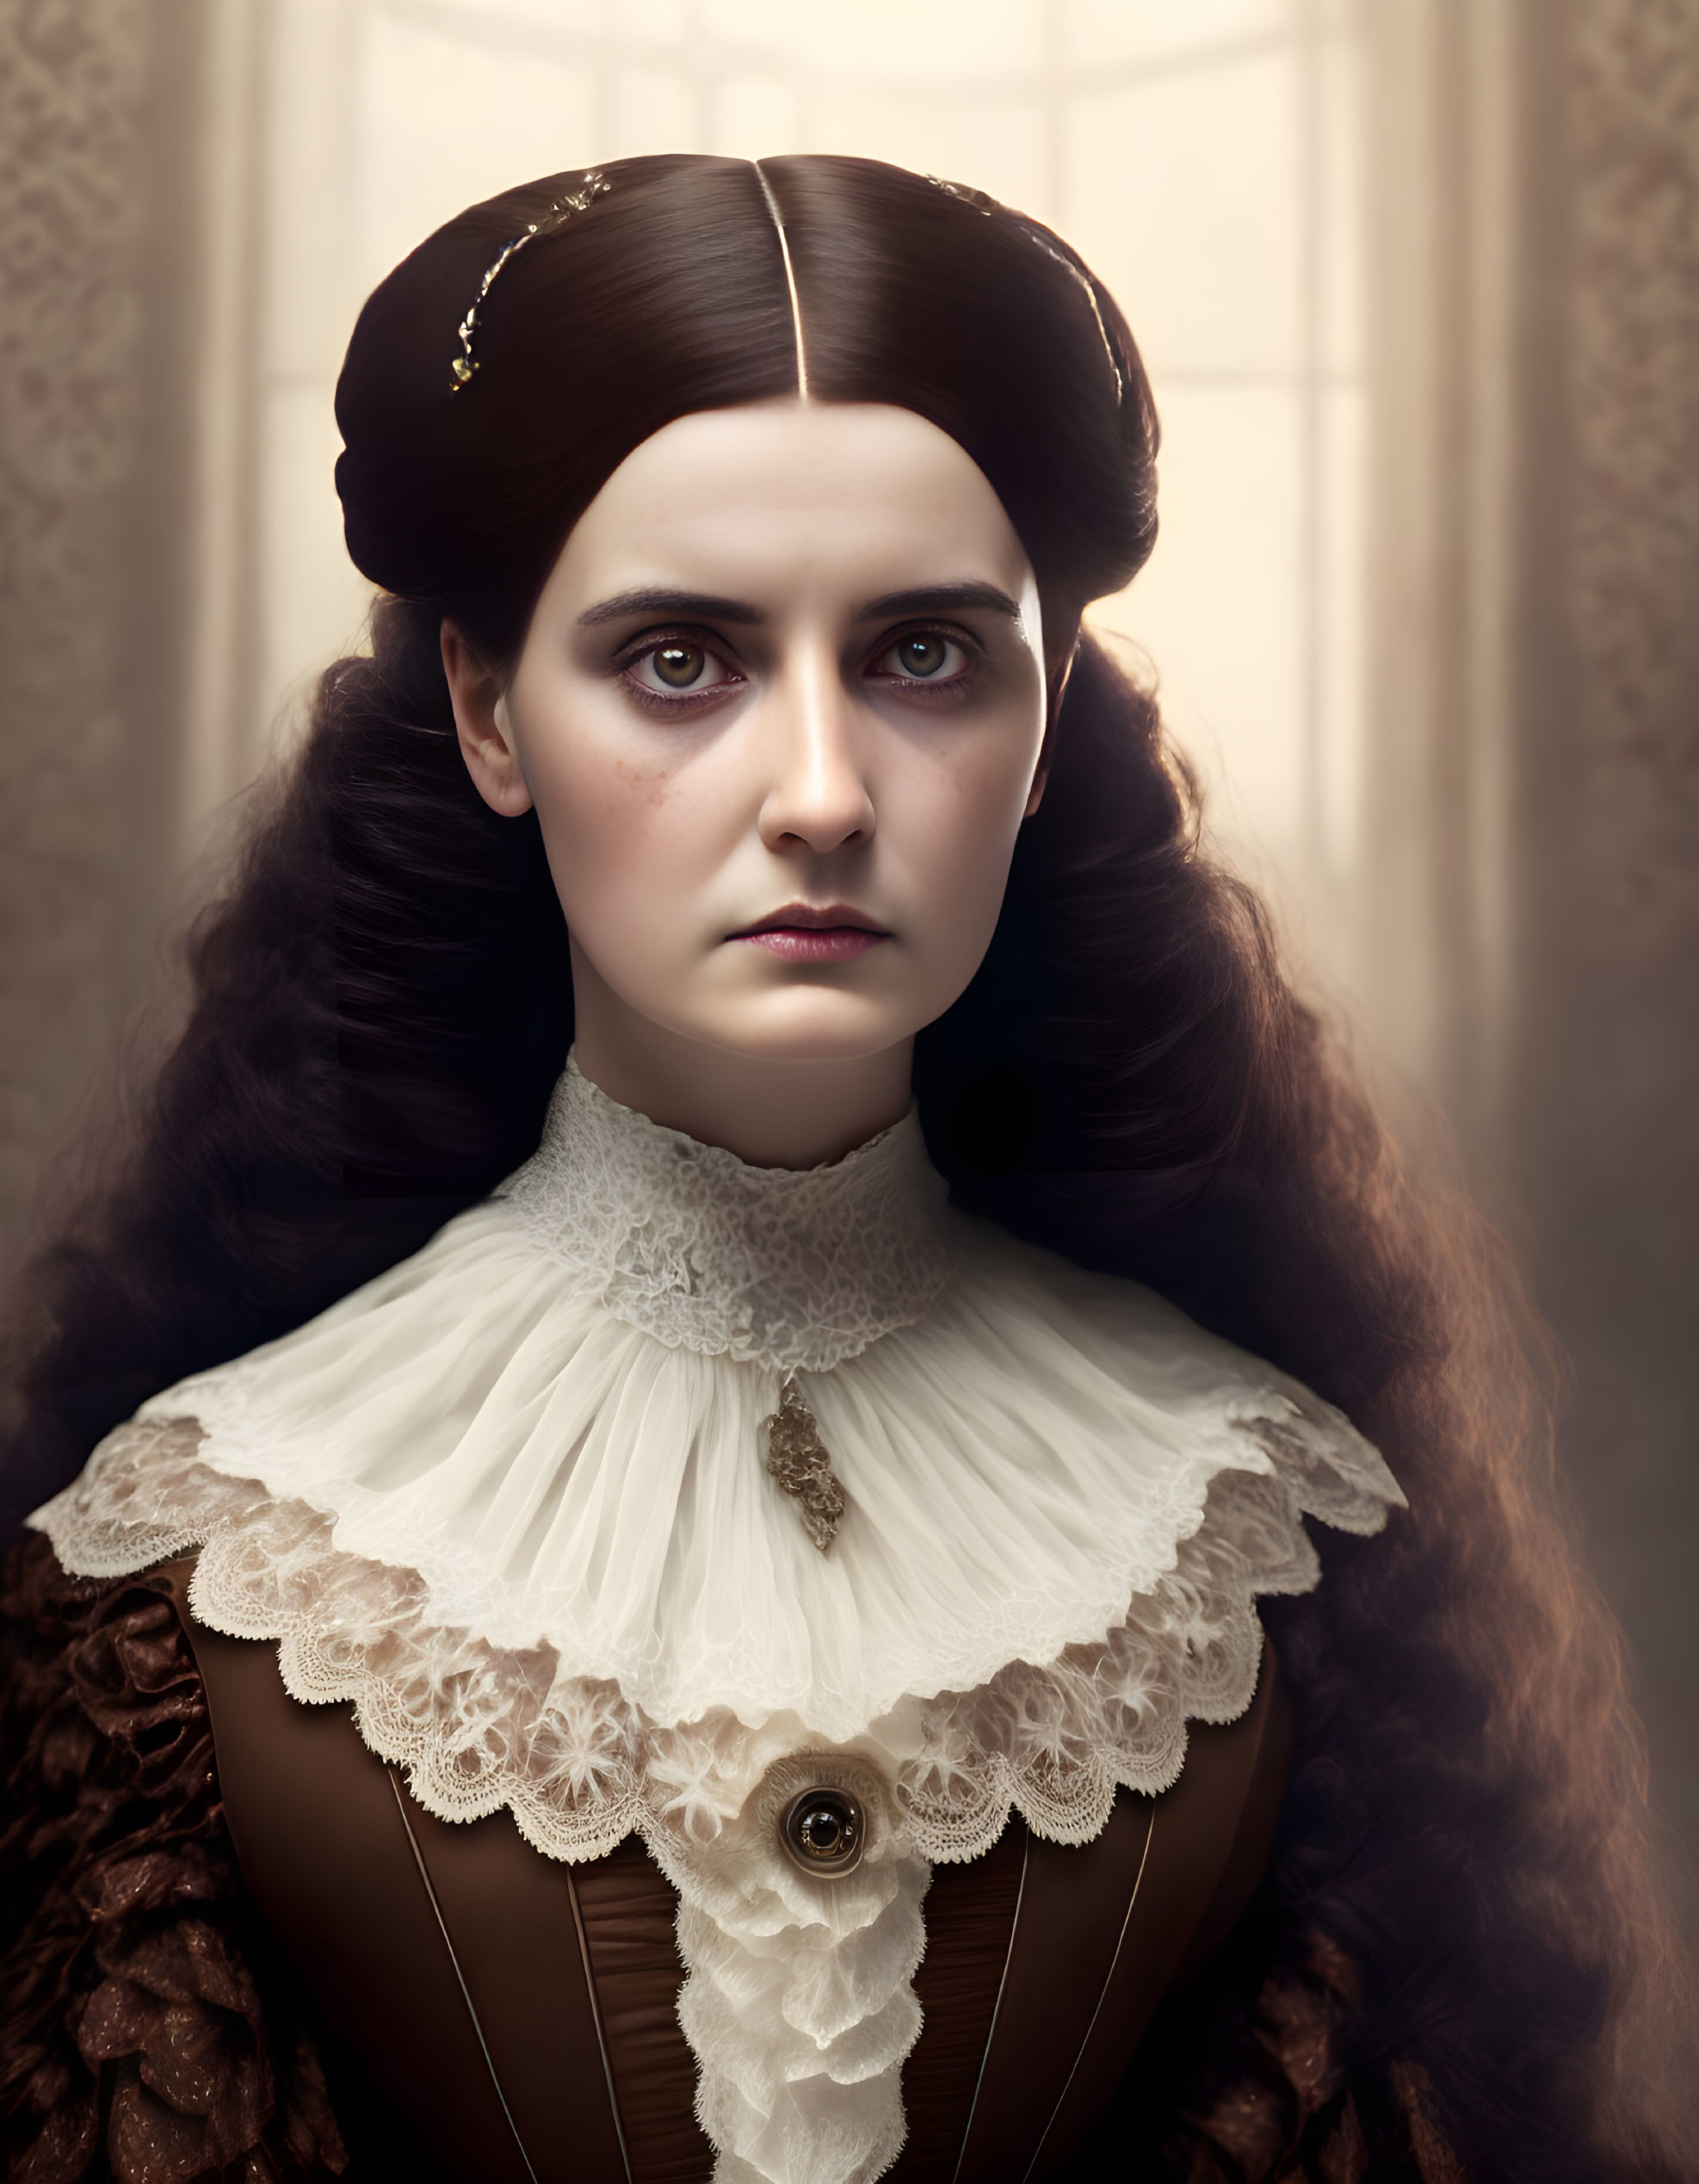 Victorian-era woman with pale skin and dark hair in ruffled collar dress